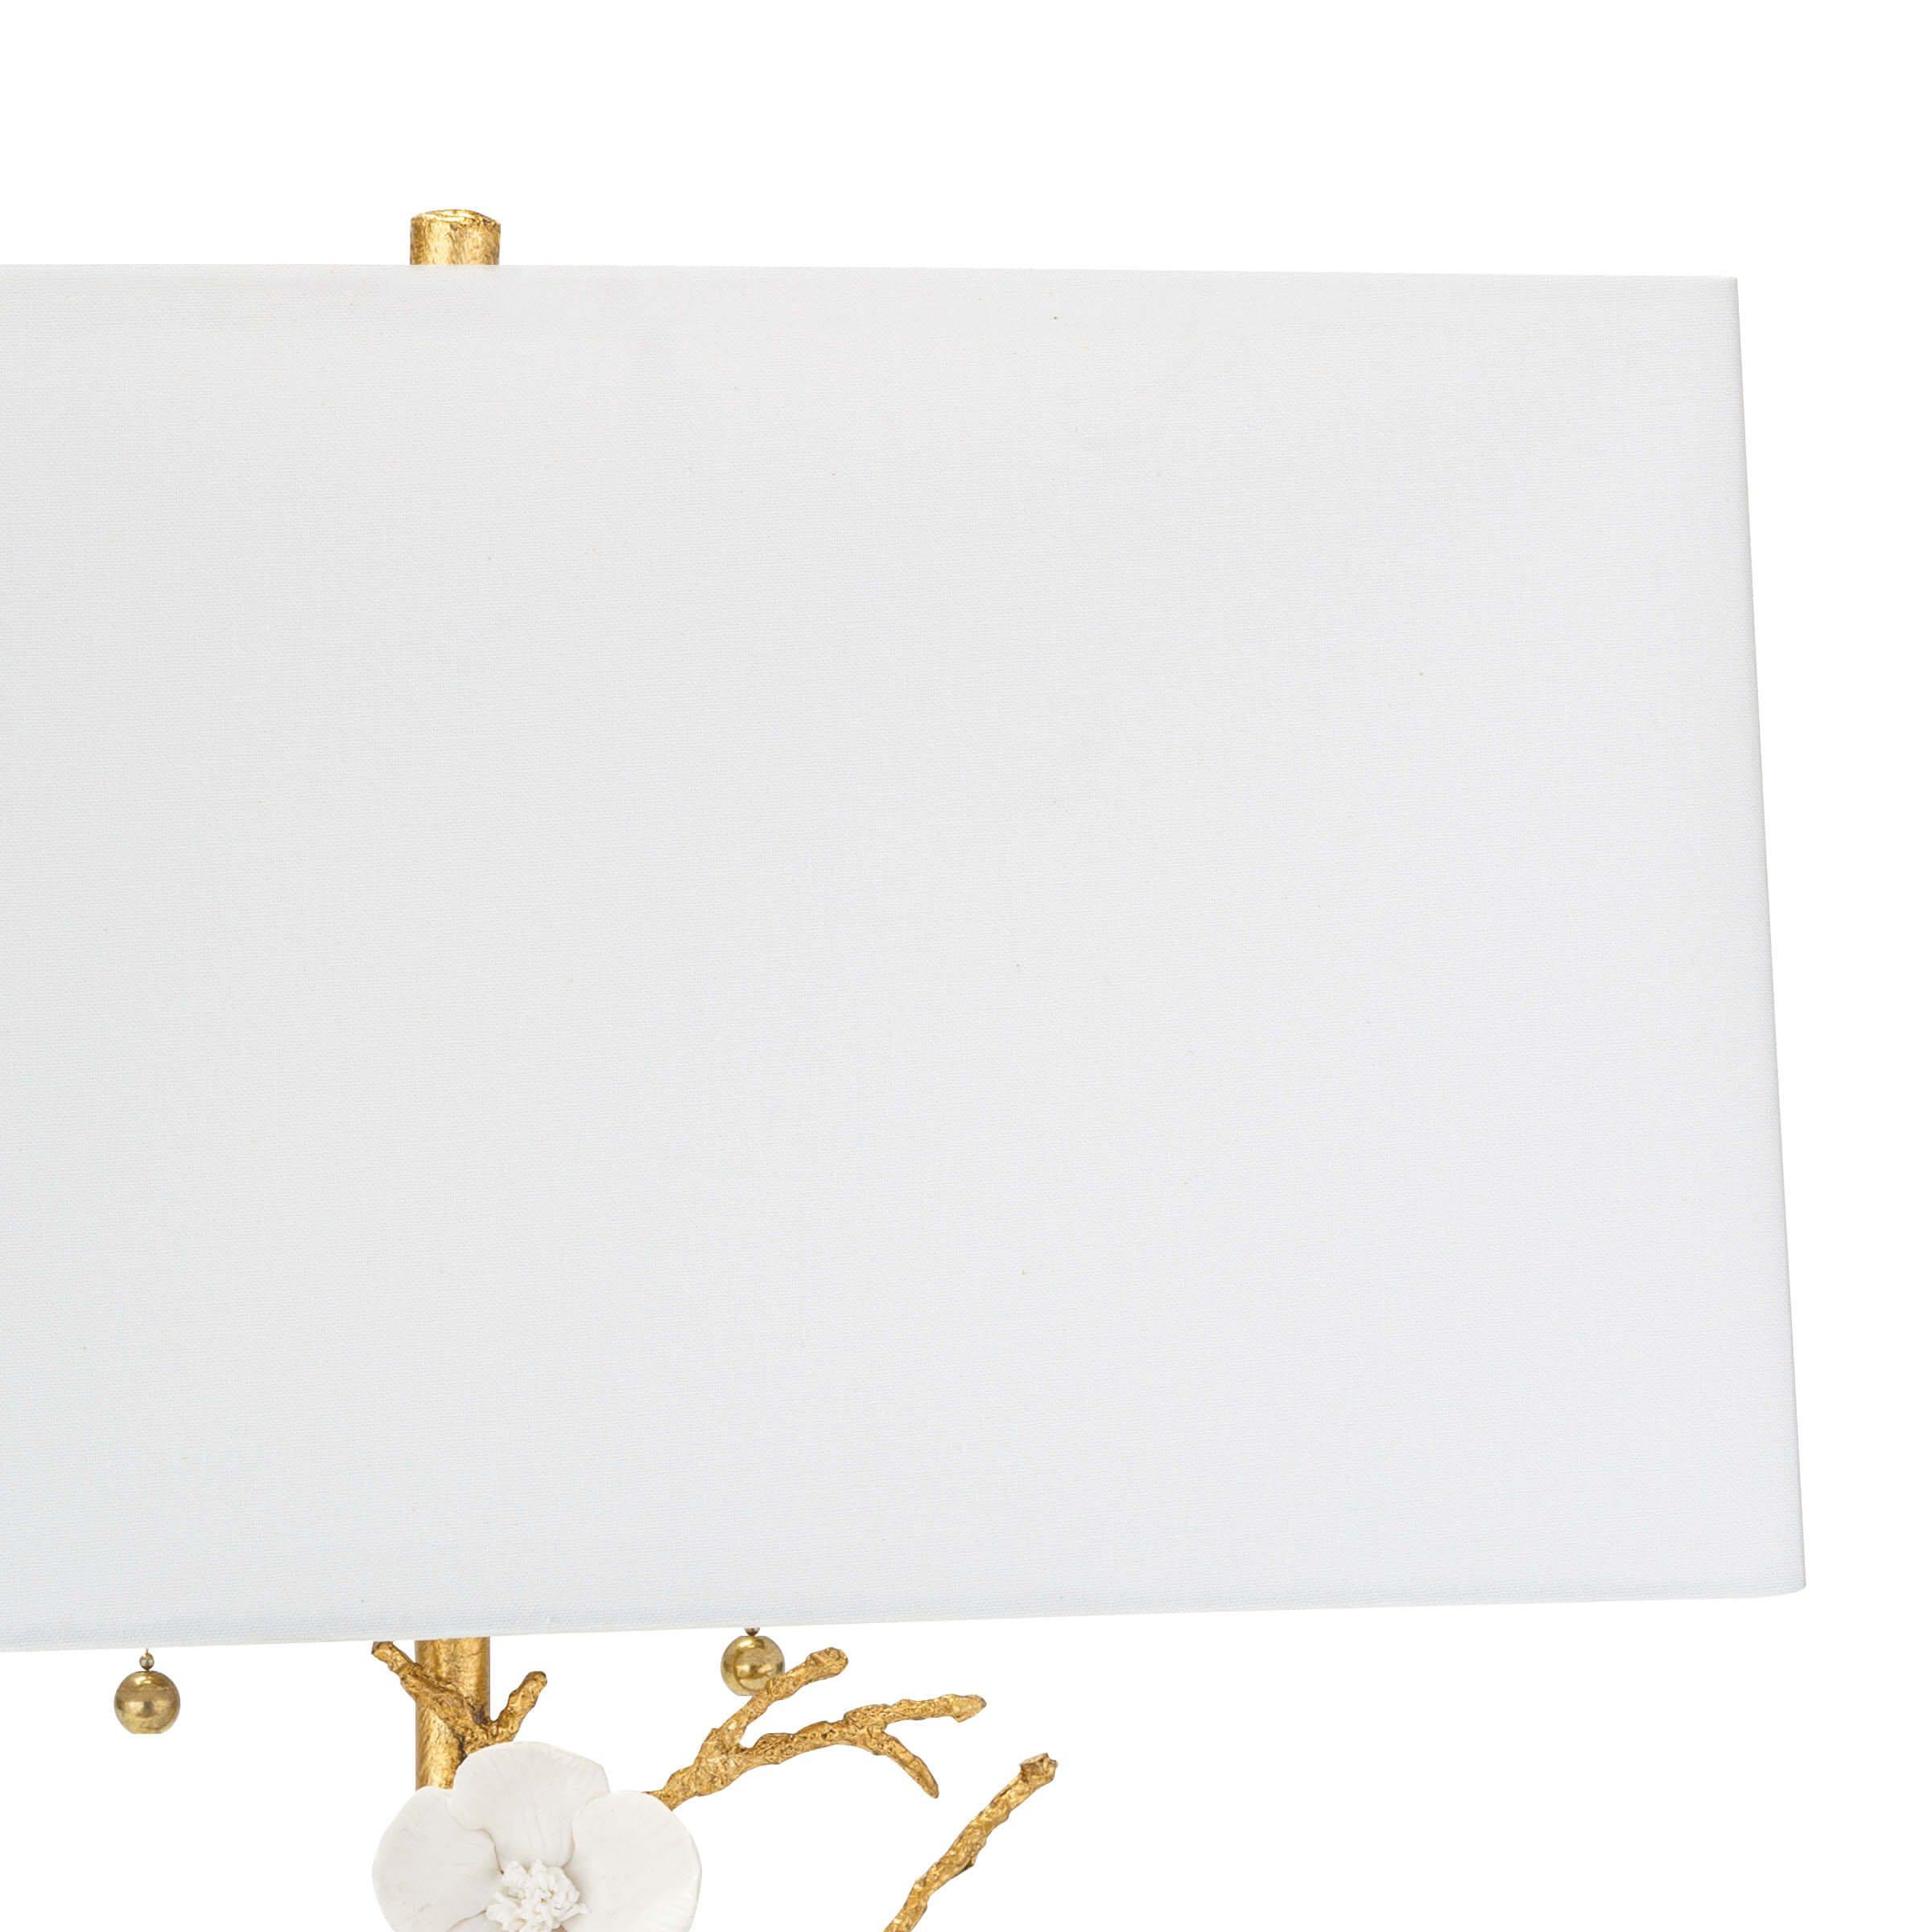 Regina Andrew Cherise Horizontal Table Lamp (Gold)